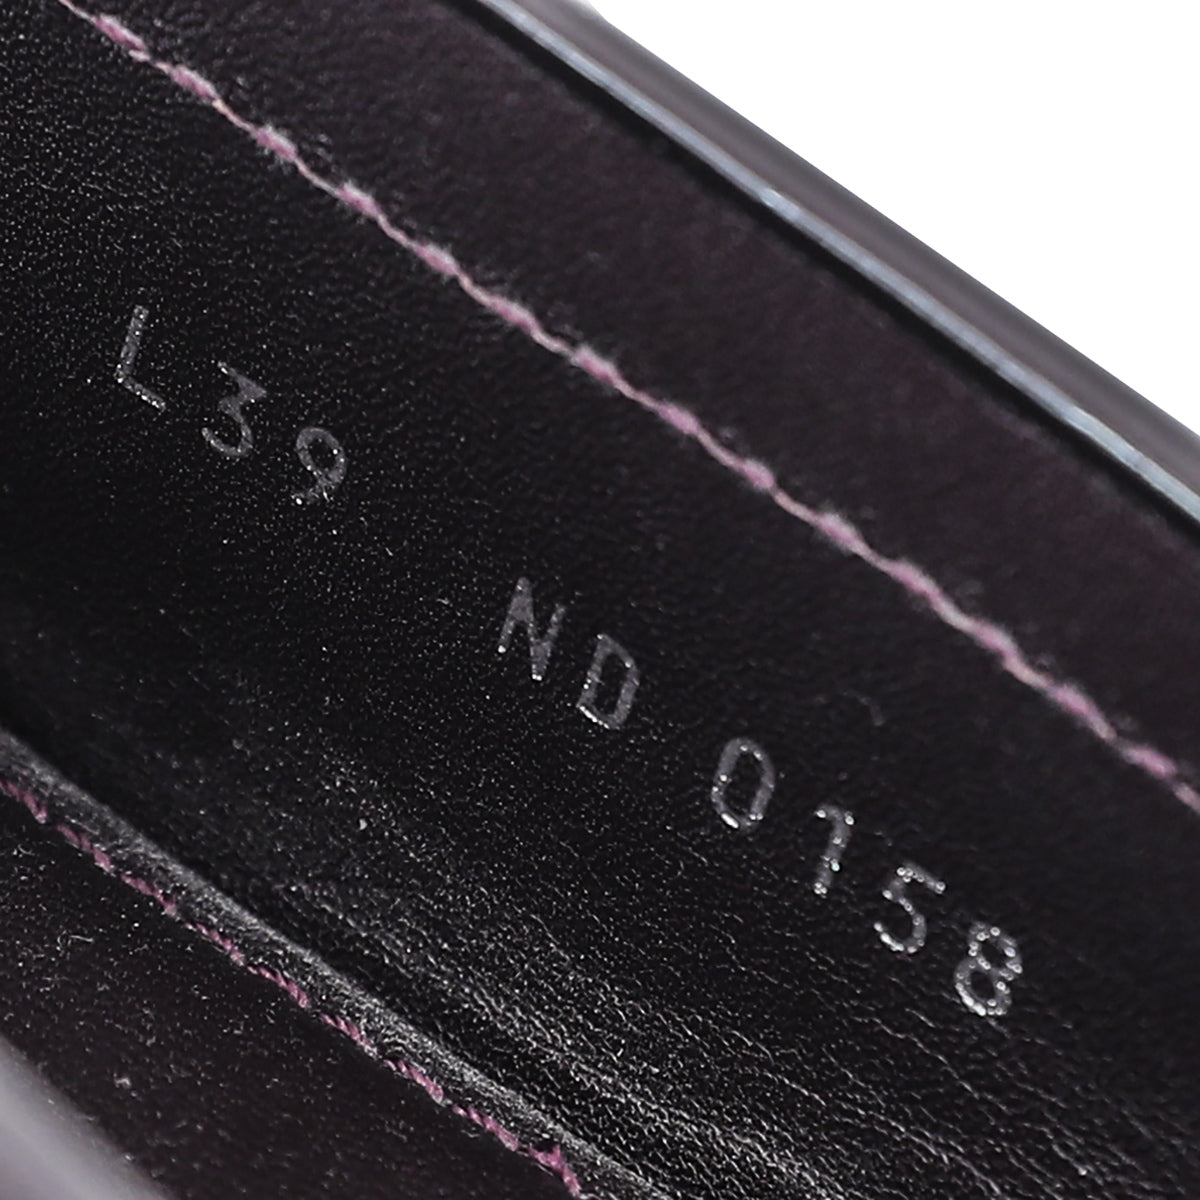 Louis Vuitton Amarante Dauphine Loafers 39